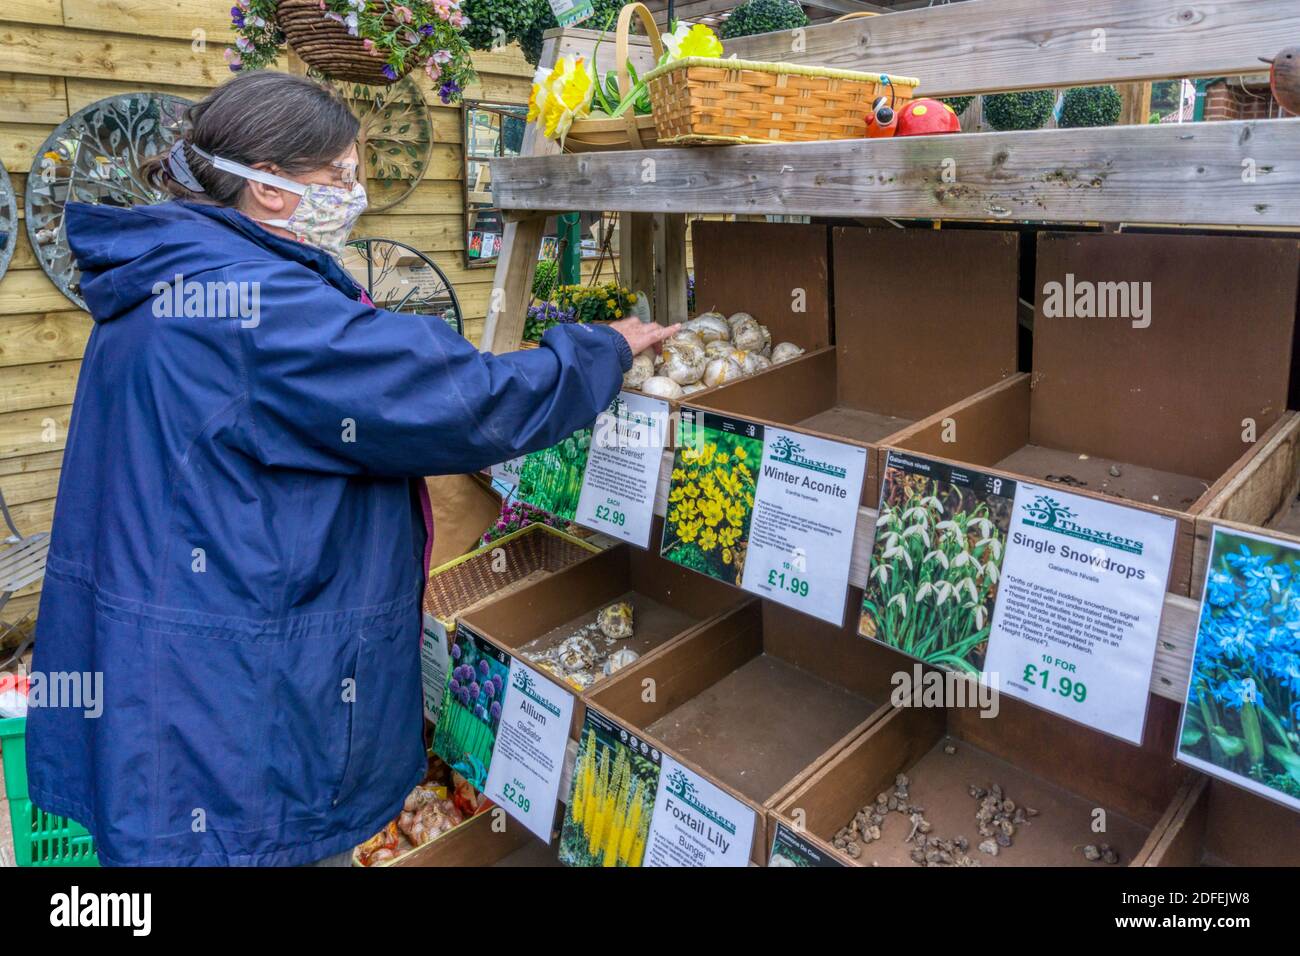 Woman wearing face mask during 2020 coronavirus pandemic buying Allium bulbs from a garden centre. Stock Photo